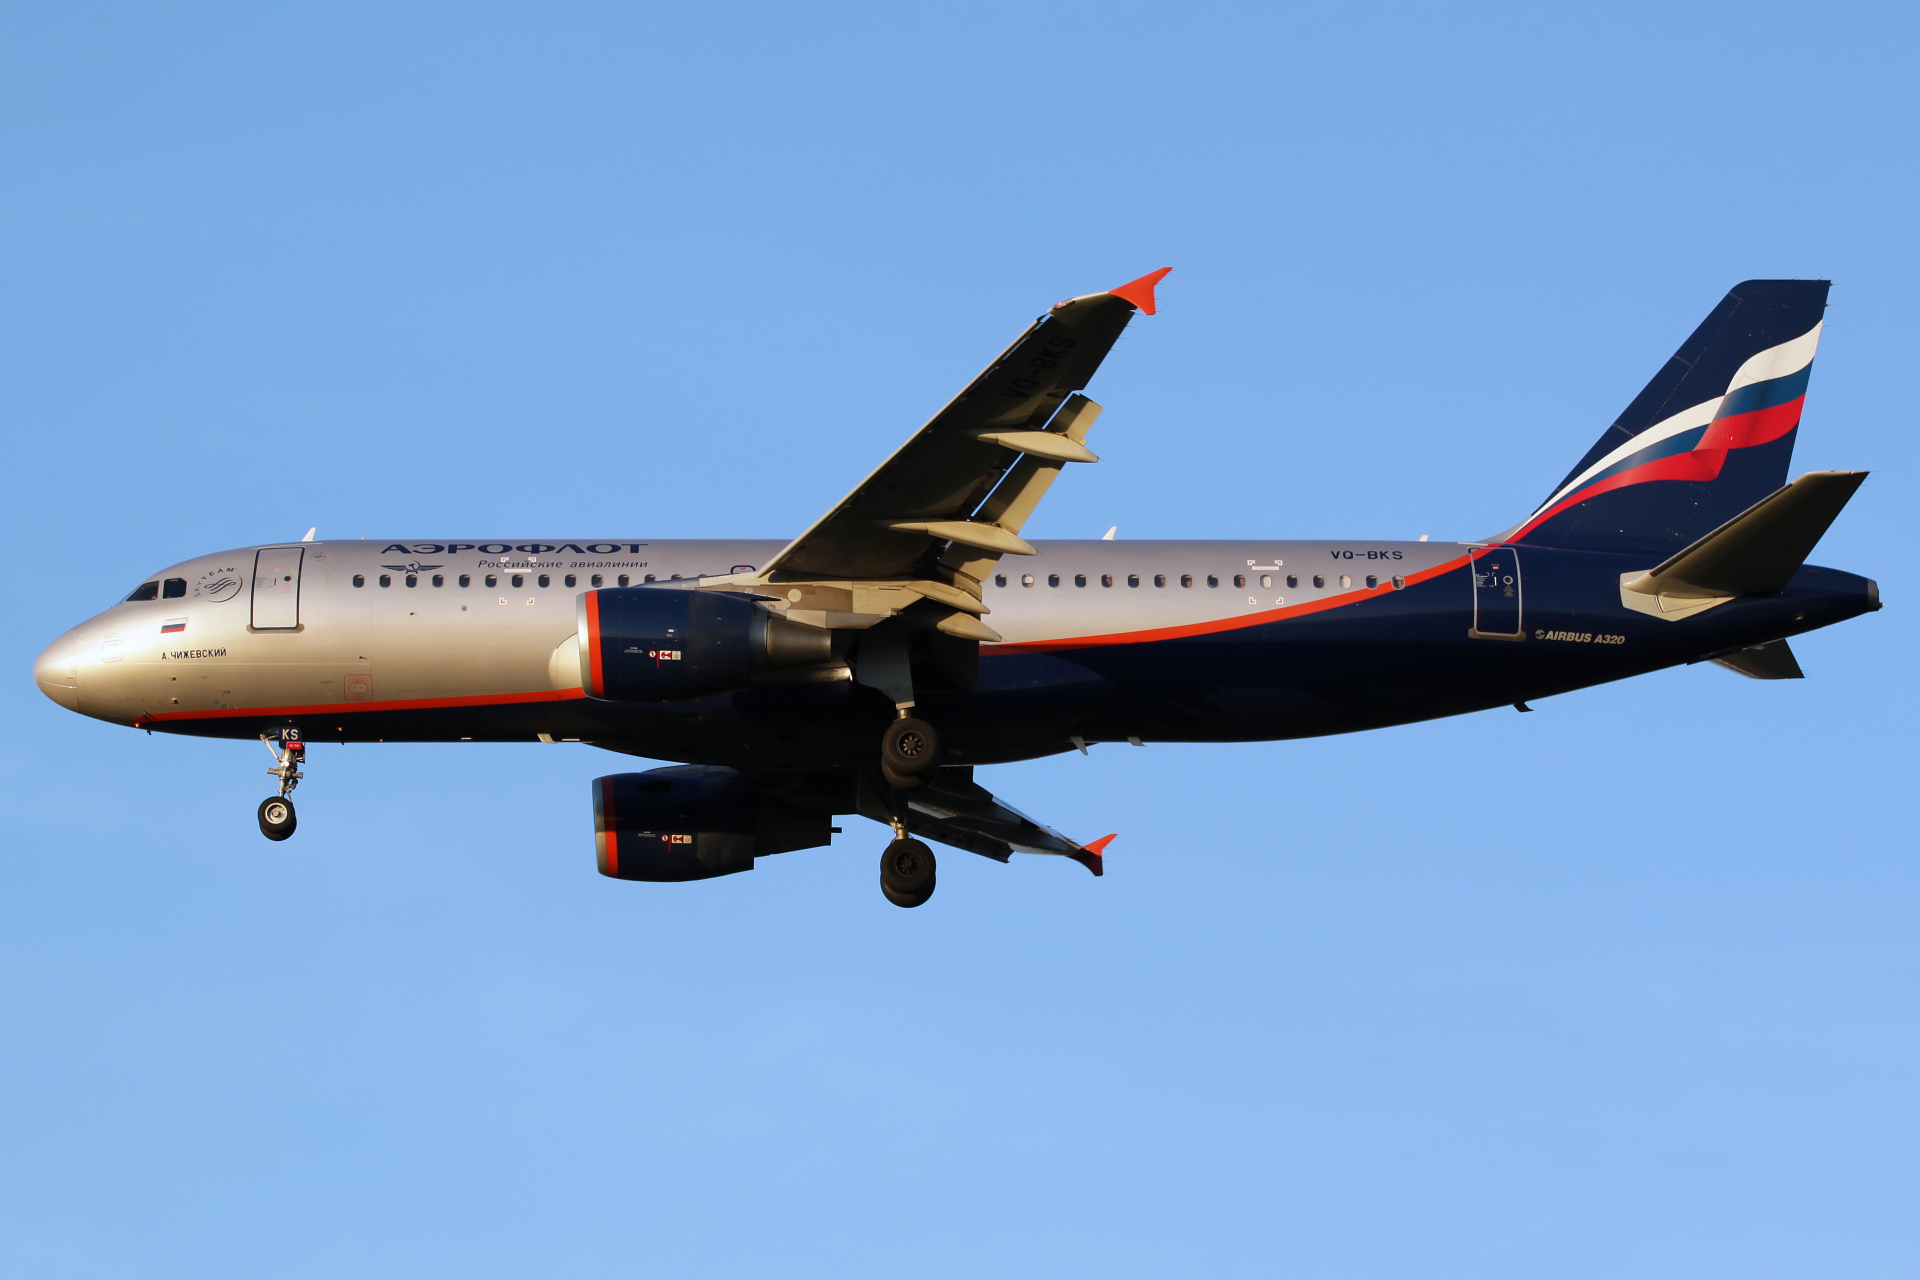 VQ-BKS (Aircraft » EPWA Spotting » Airbus A320-200 » Aeroflot Russian Airlines)